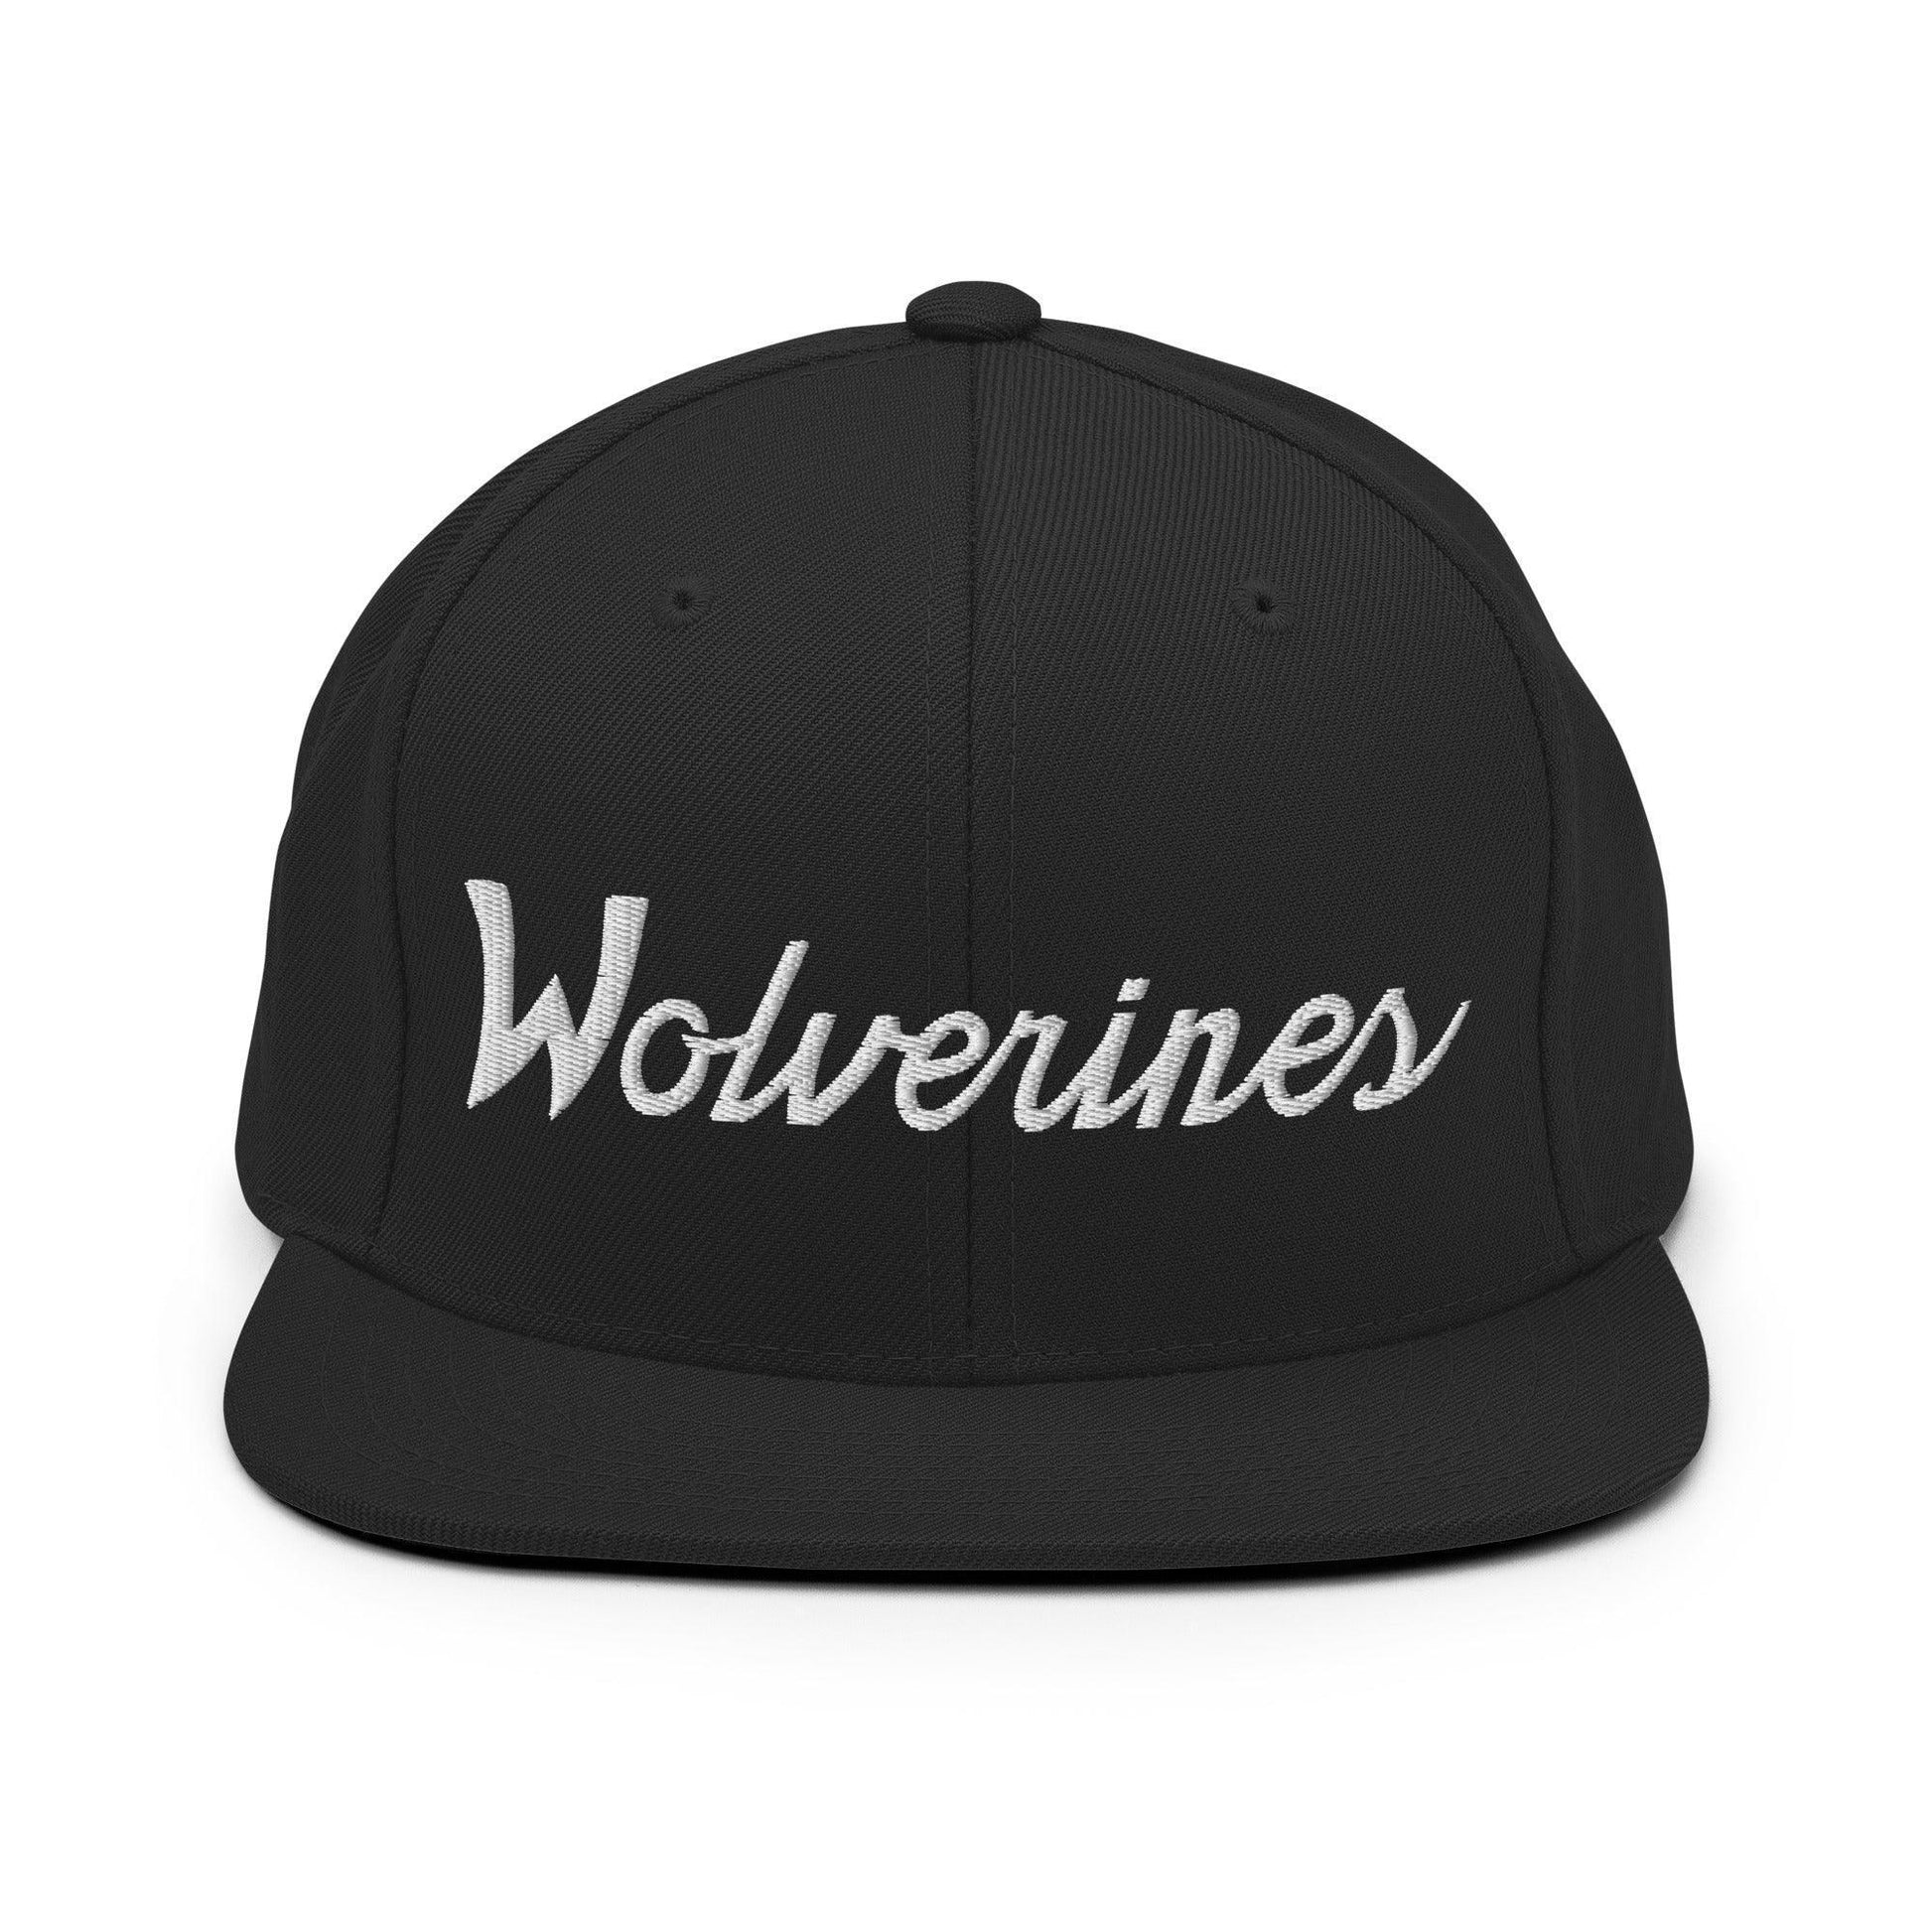 Wolverines School Mascot Script Snapback Hat Black